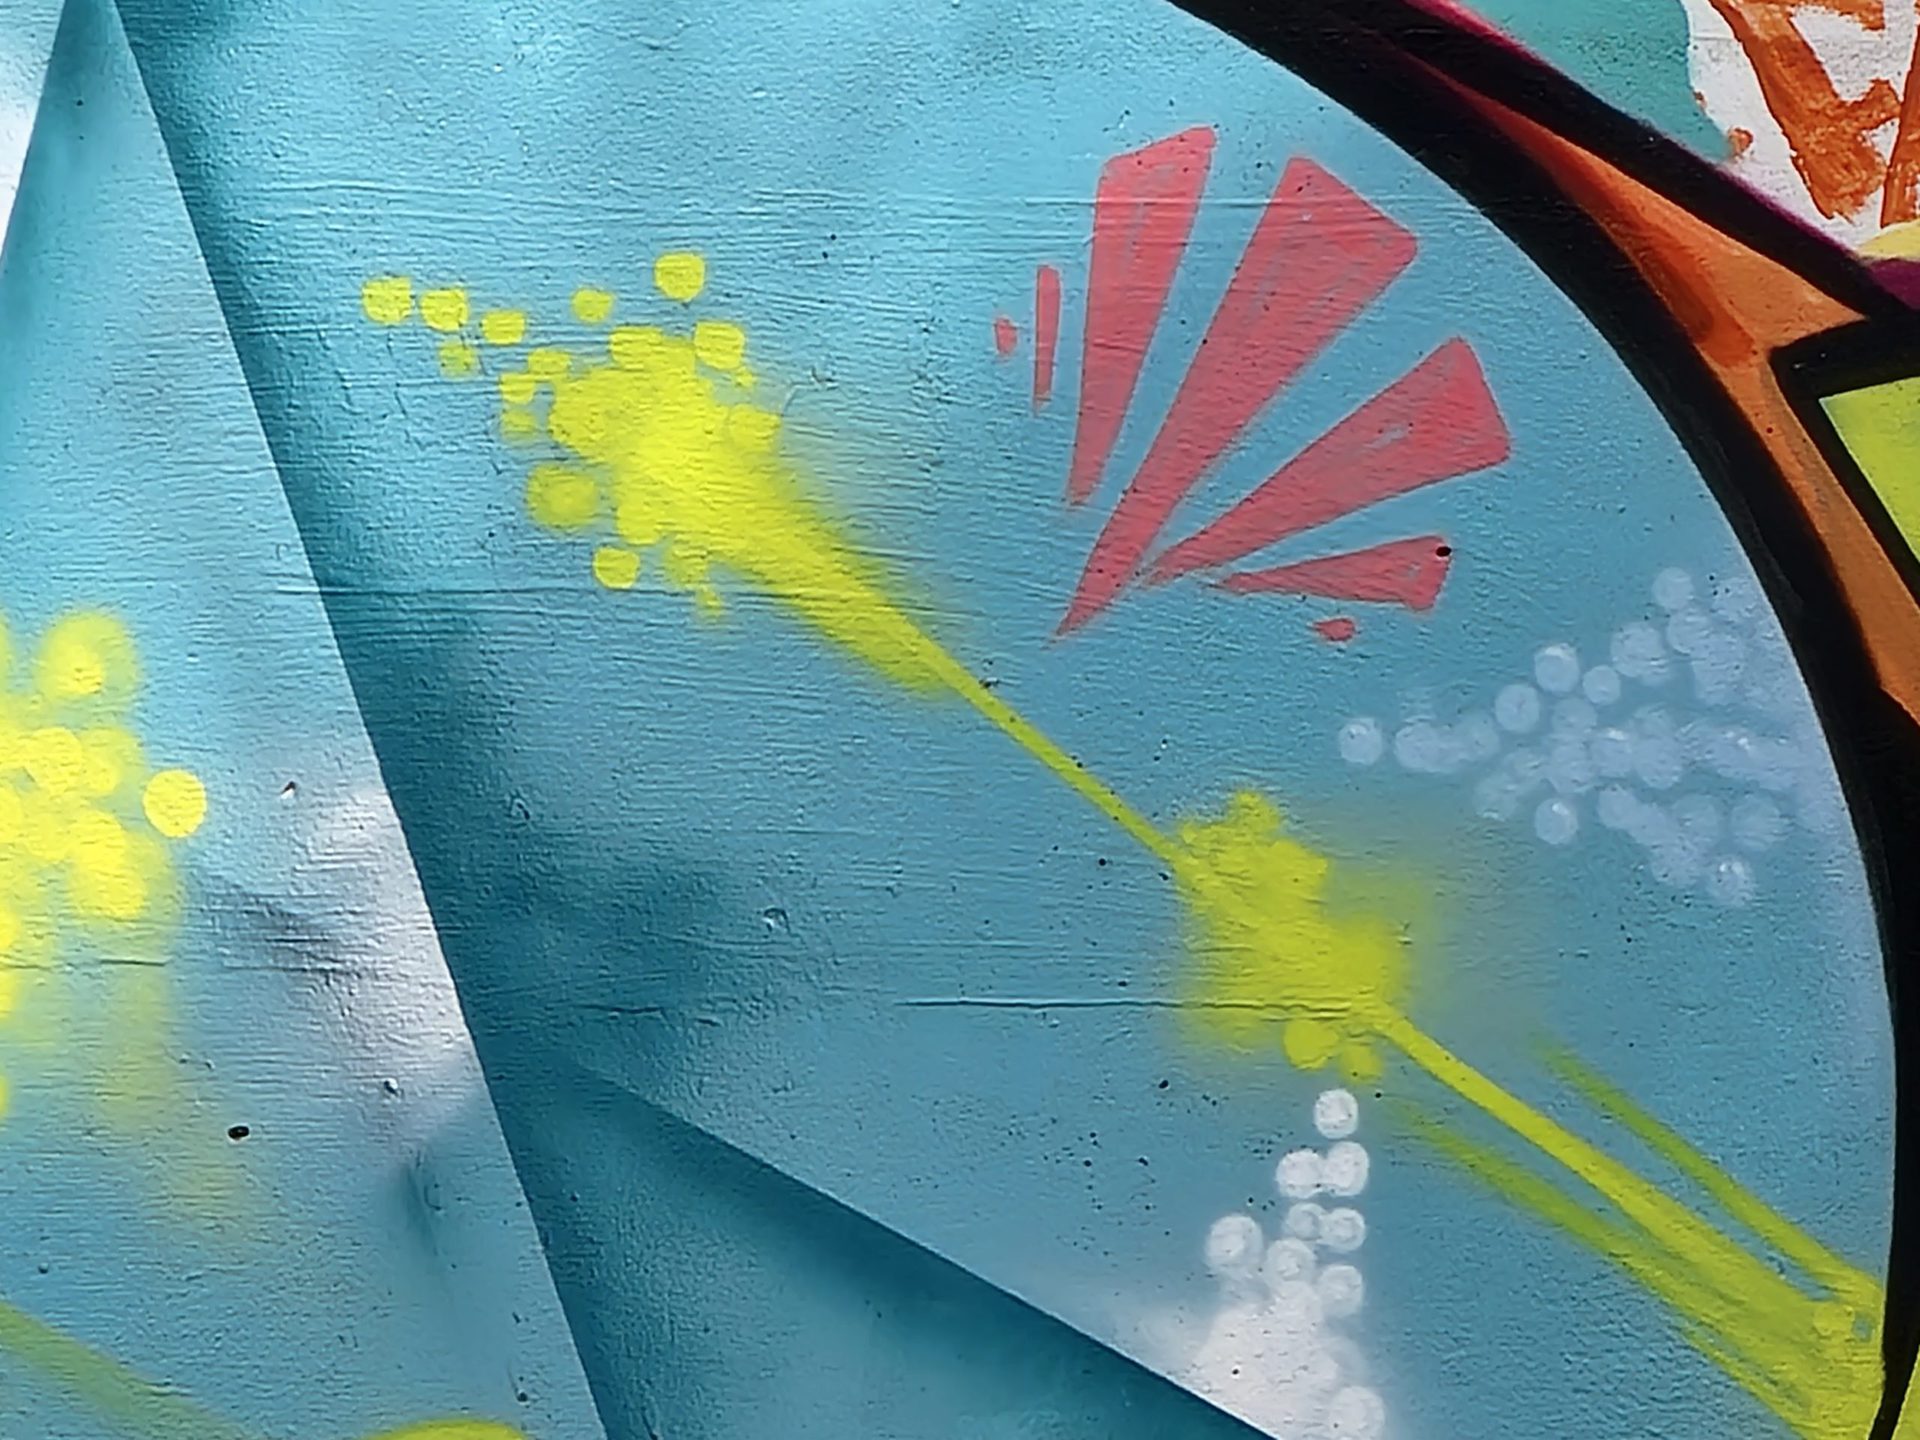 A graffiti underpass at 30x zoom.